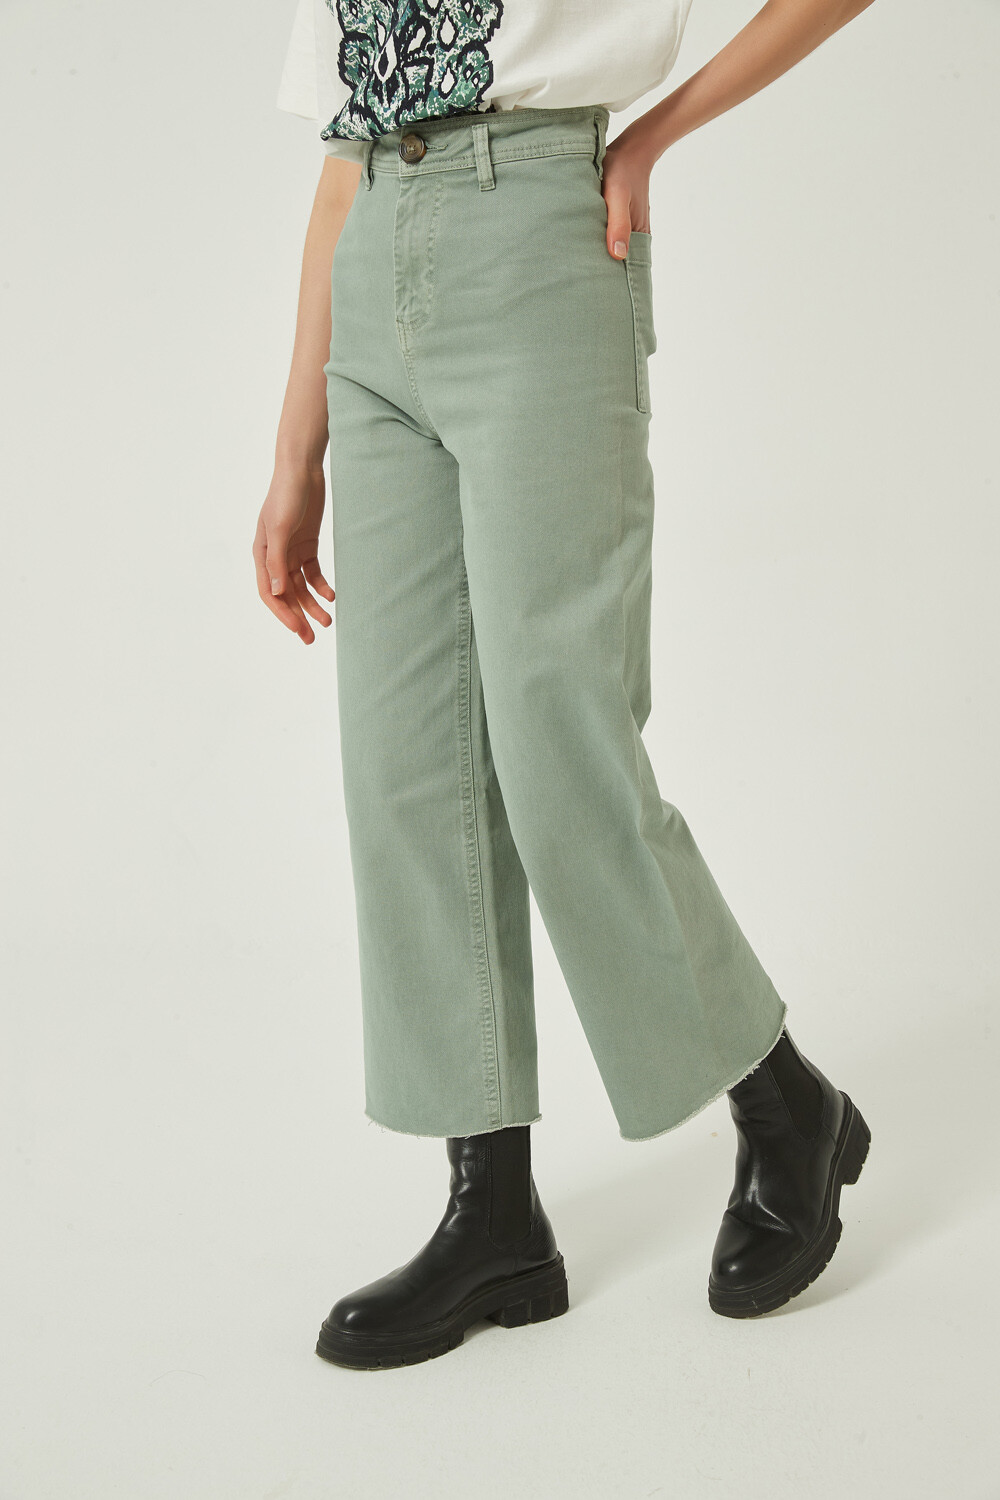 Pantalon Cobdar Verde Grisaceo